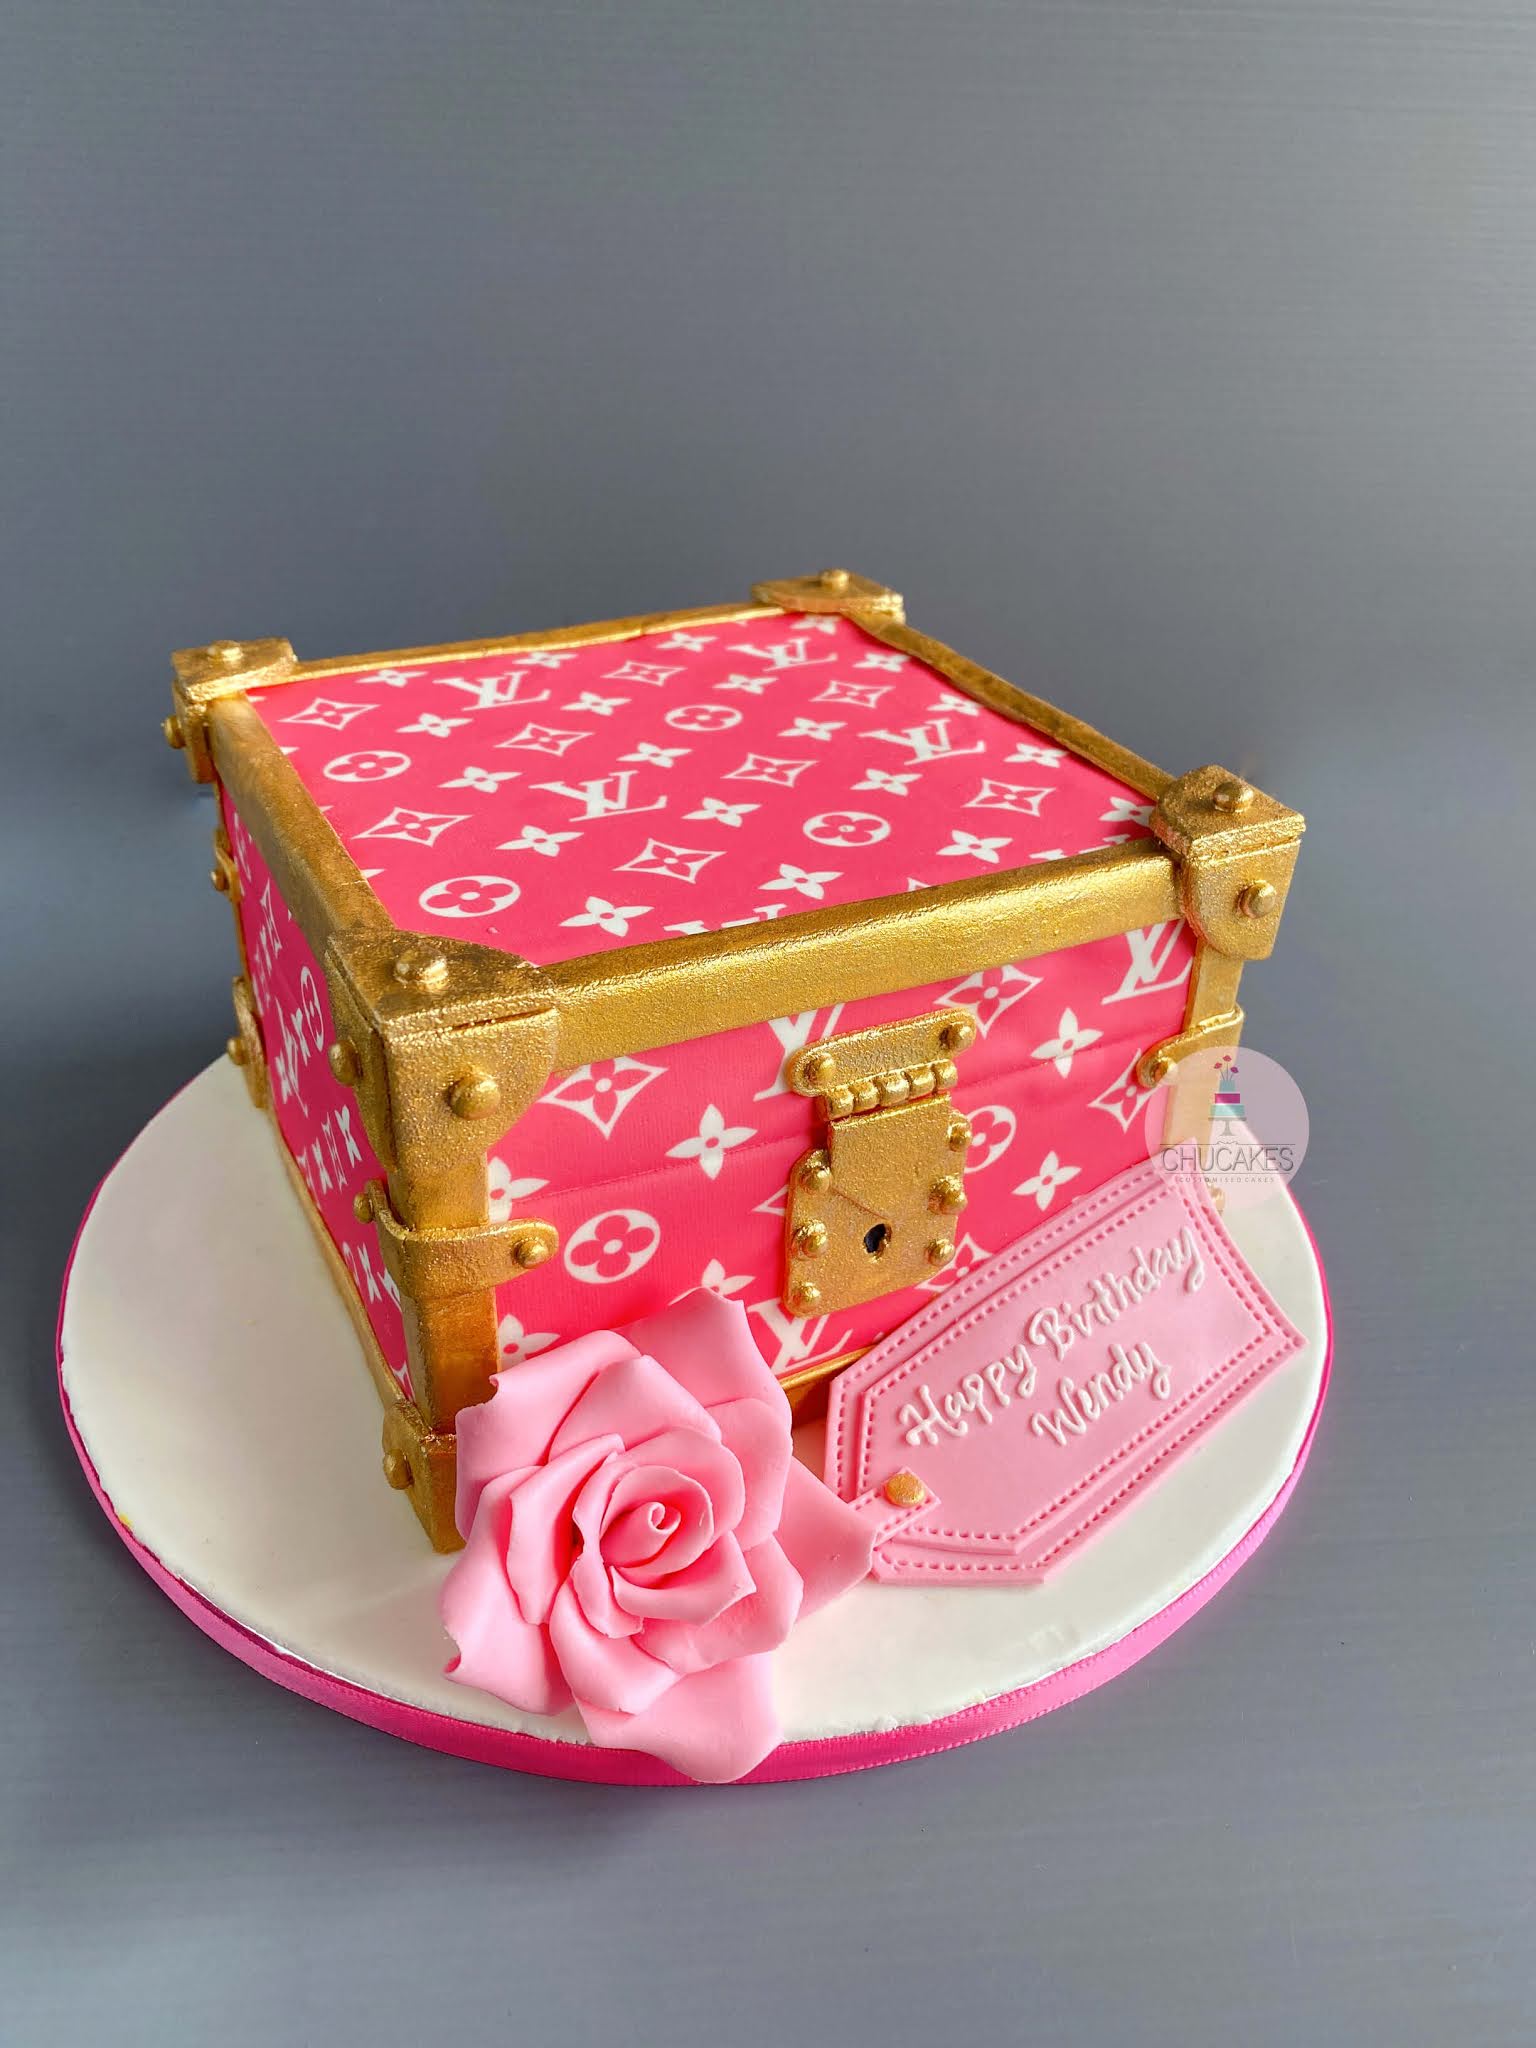 Louis Vuitton Birthday Cake - CakeCentral.com